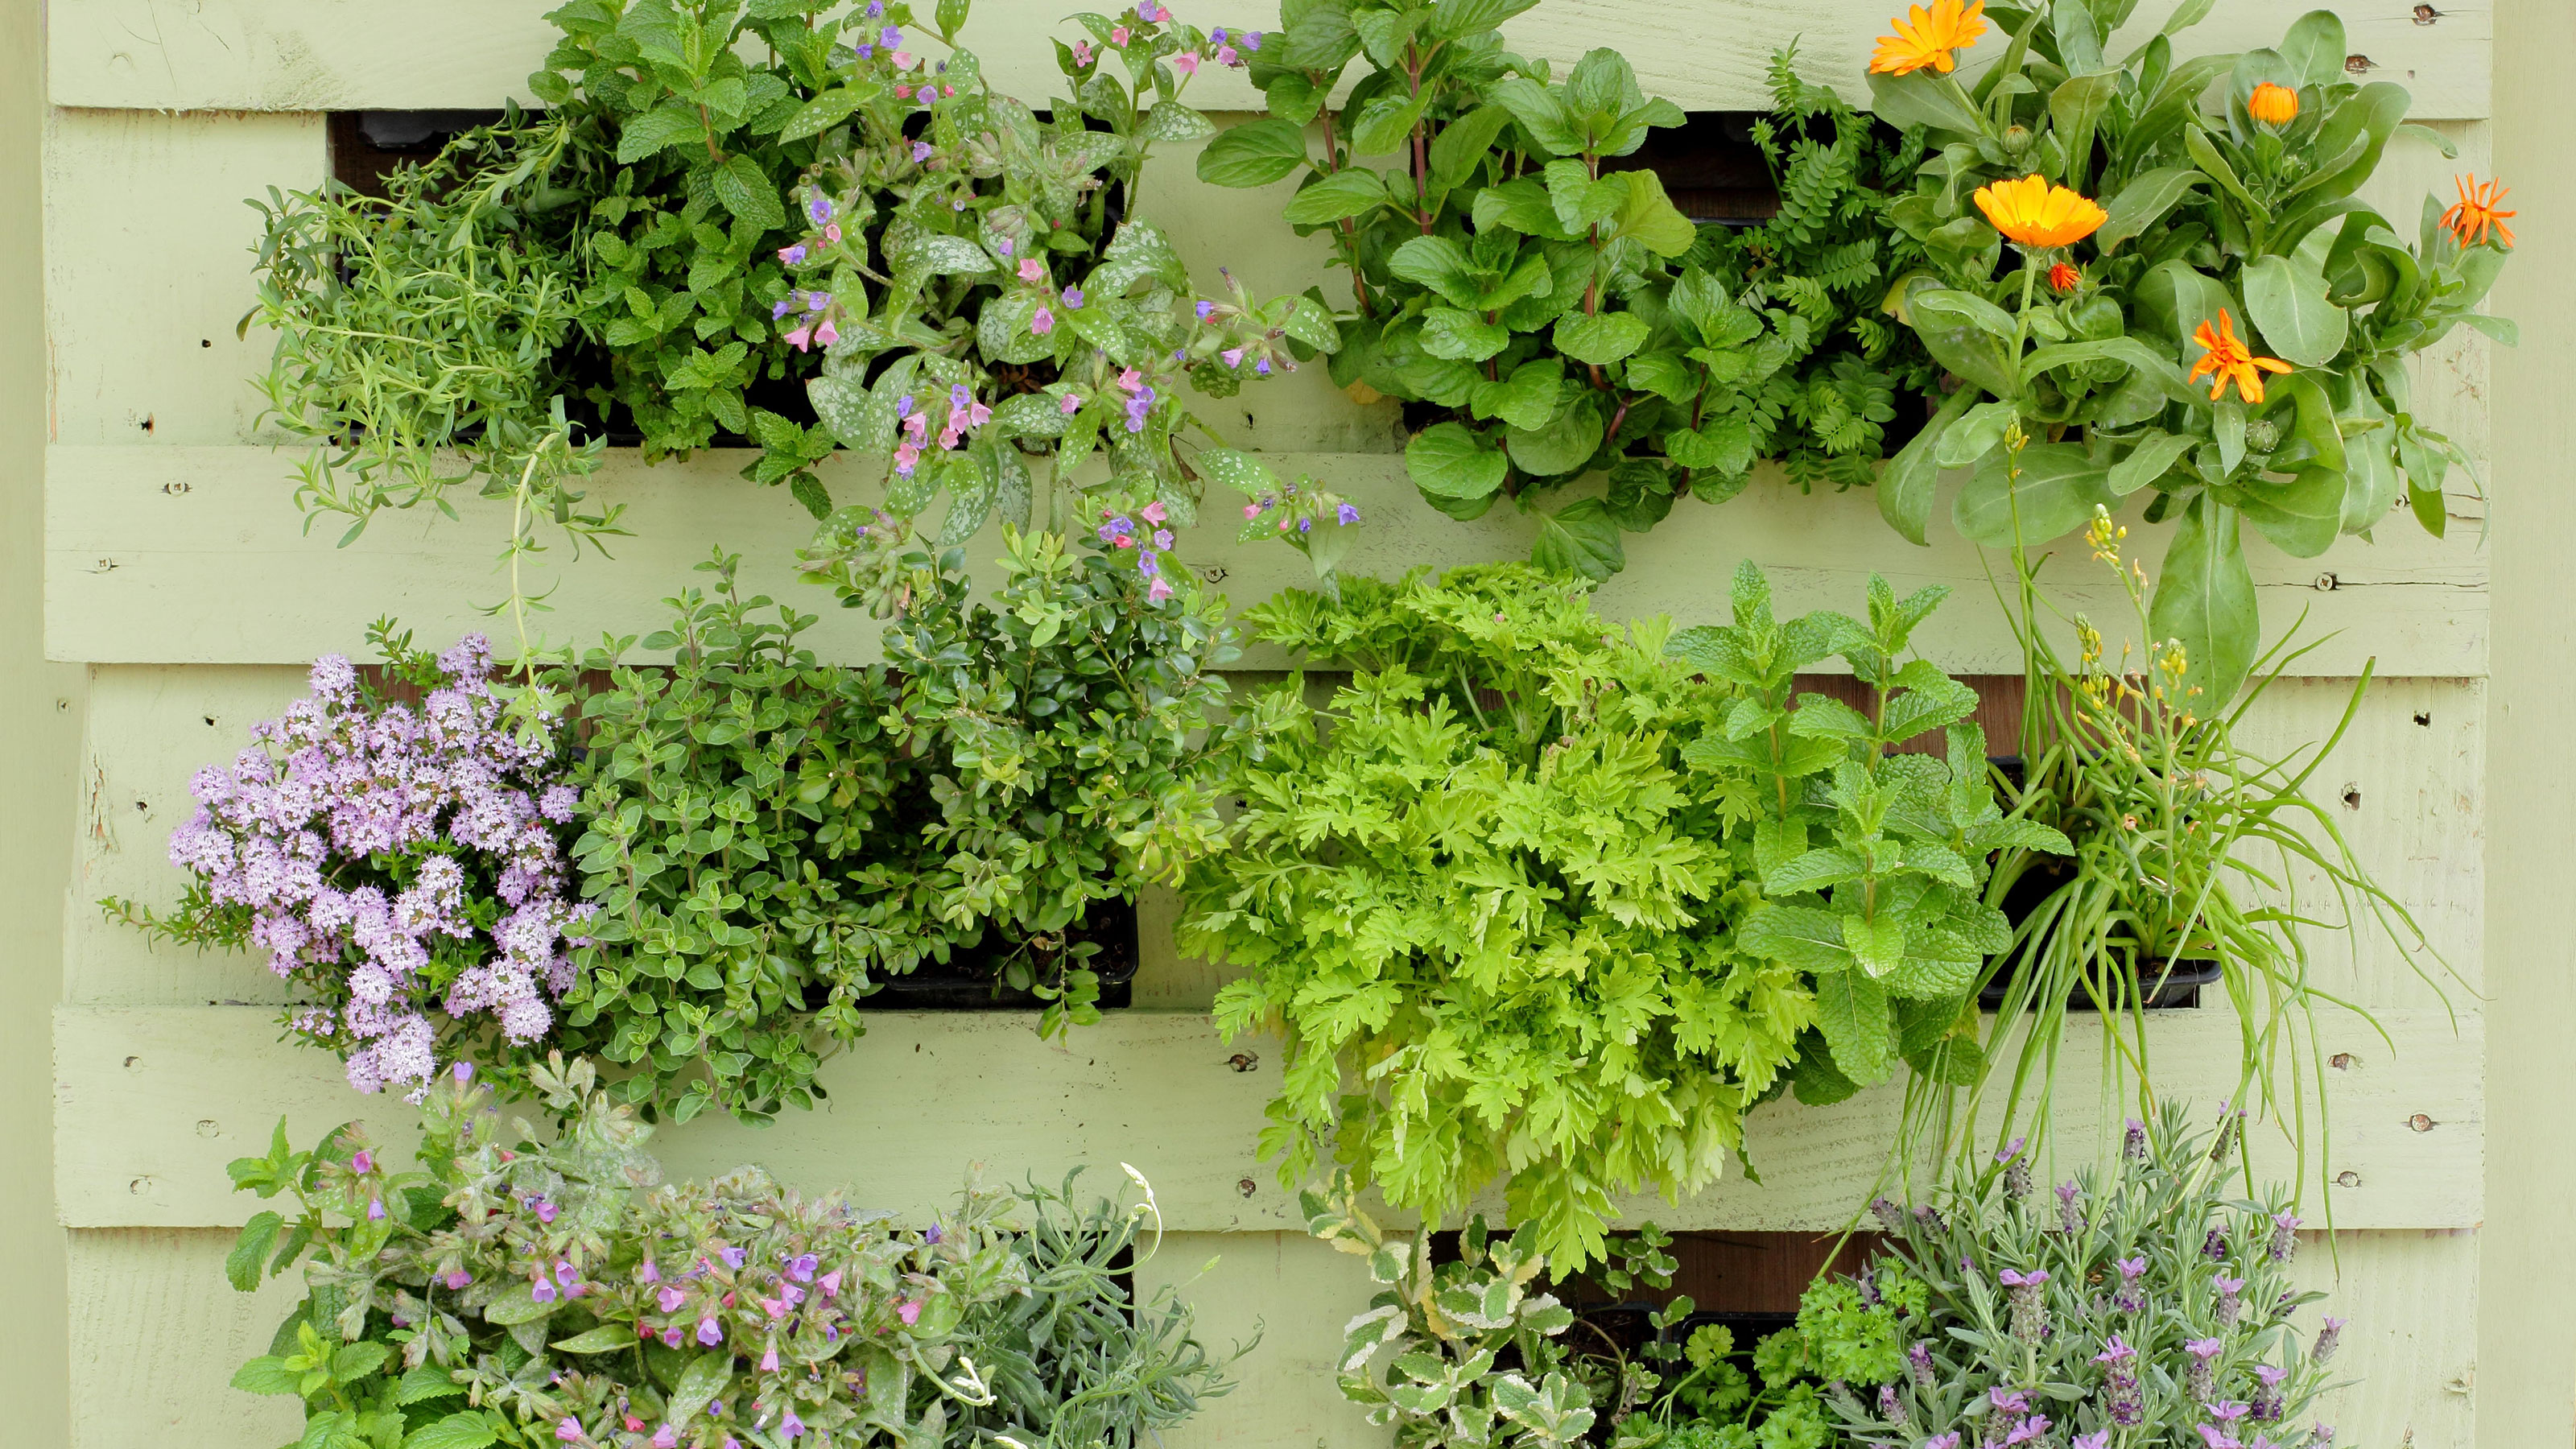 Pallet Garden Wall Ideas: 15 Quick And Cheap Diy Projects | Gardeningetc